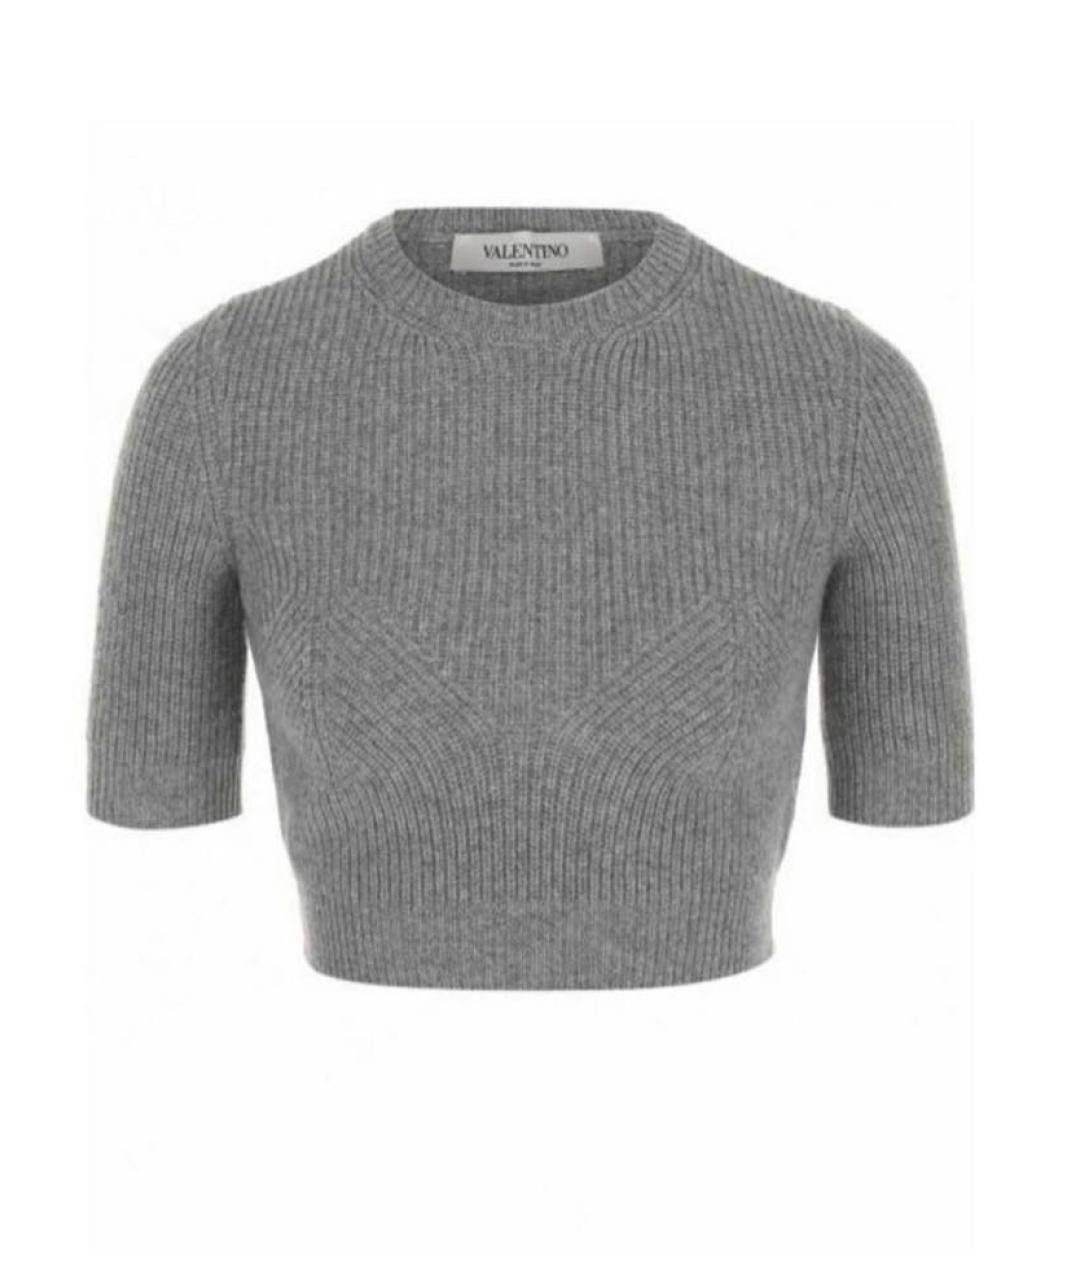 VALENTINO Серый кашемировый джемпер / свитер, фото 1